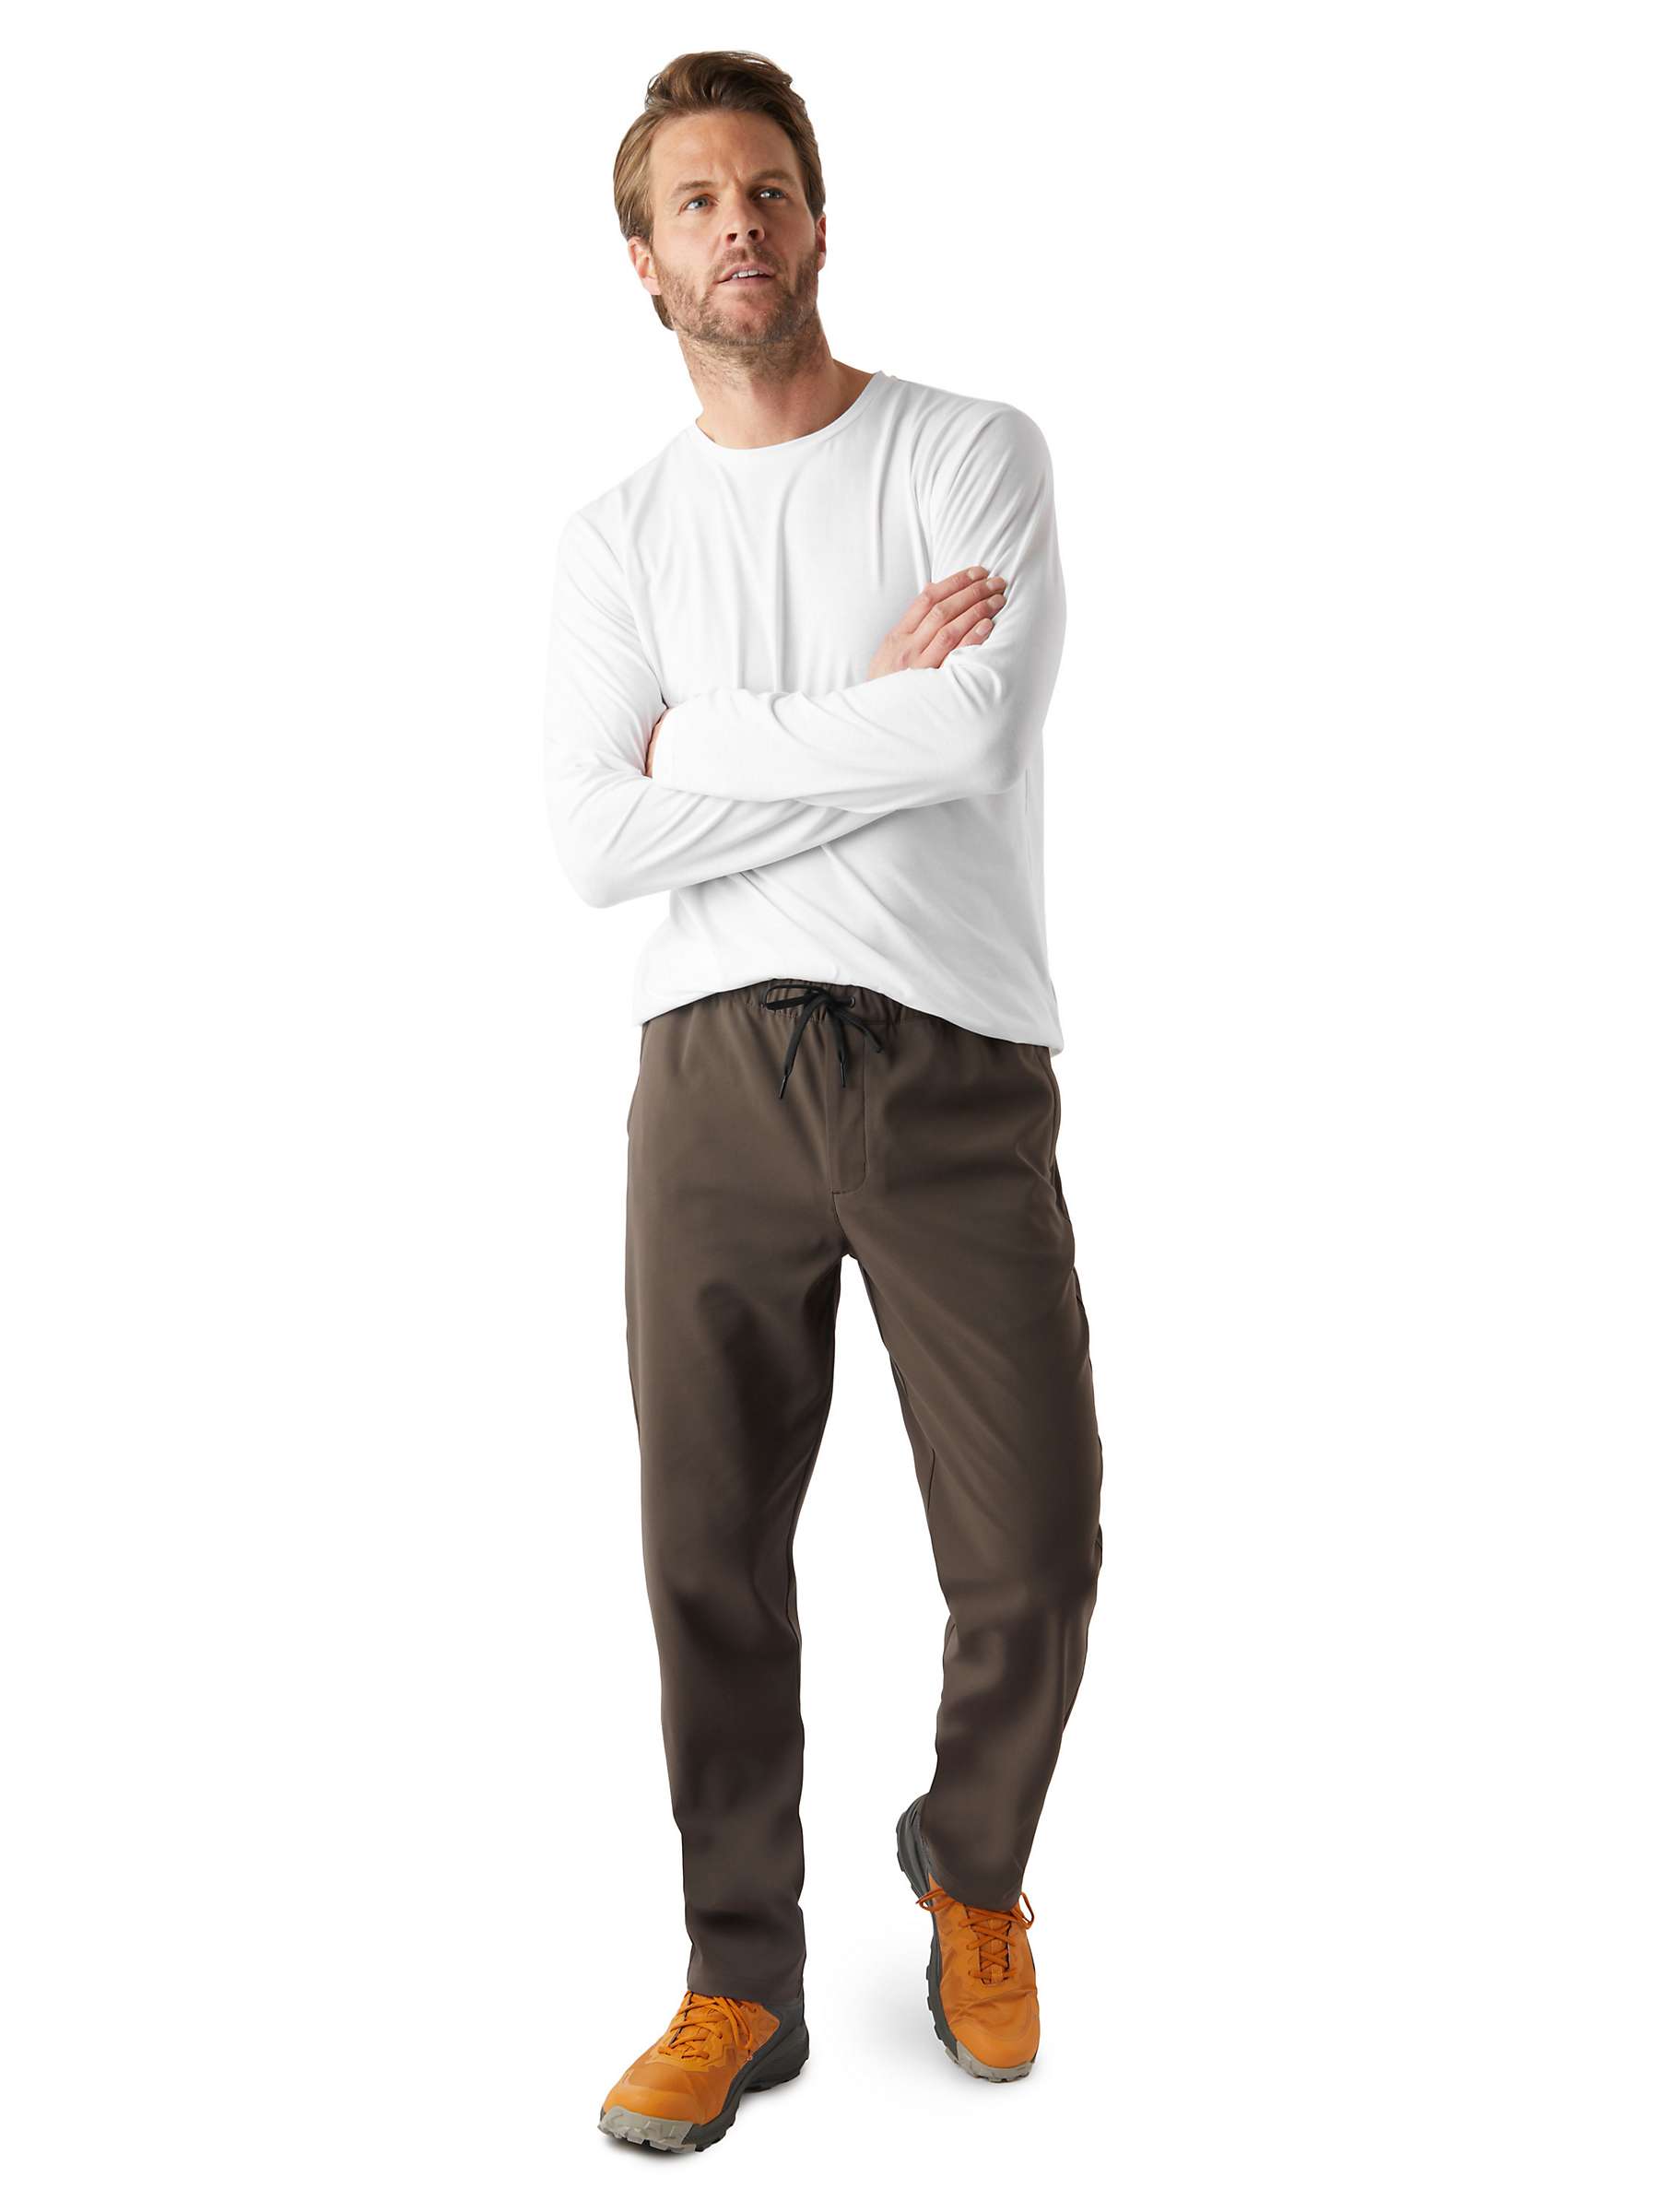 Buy Rohan Troggings Walking Trousers Online at johnlewis.com